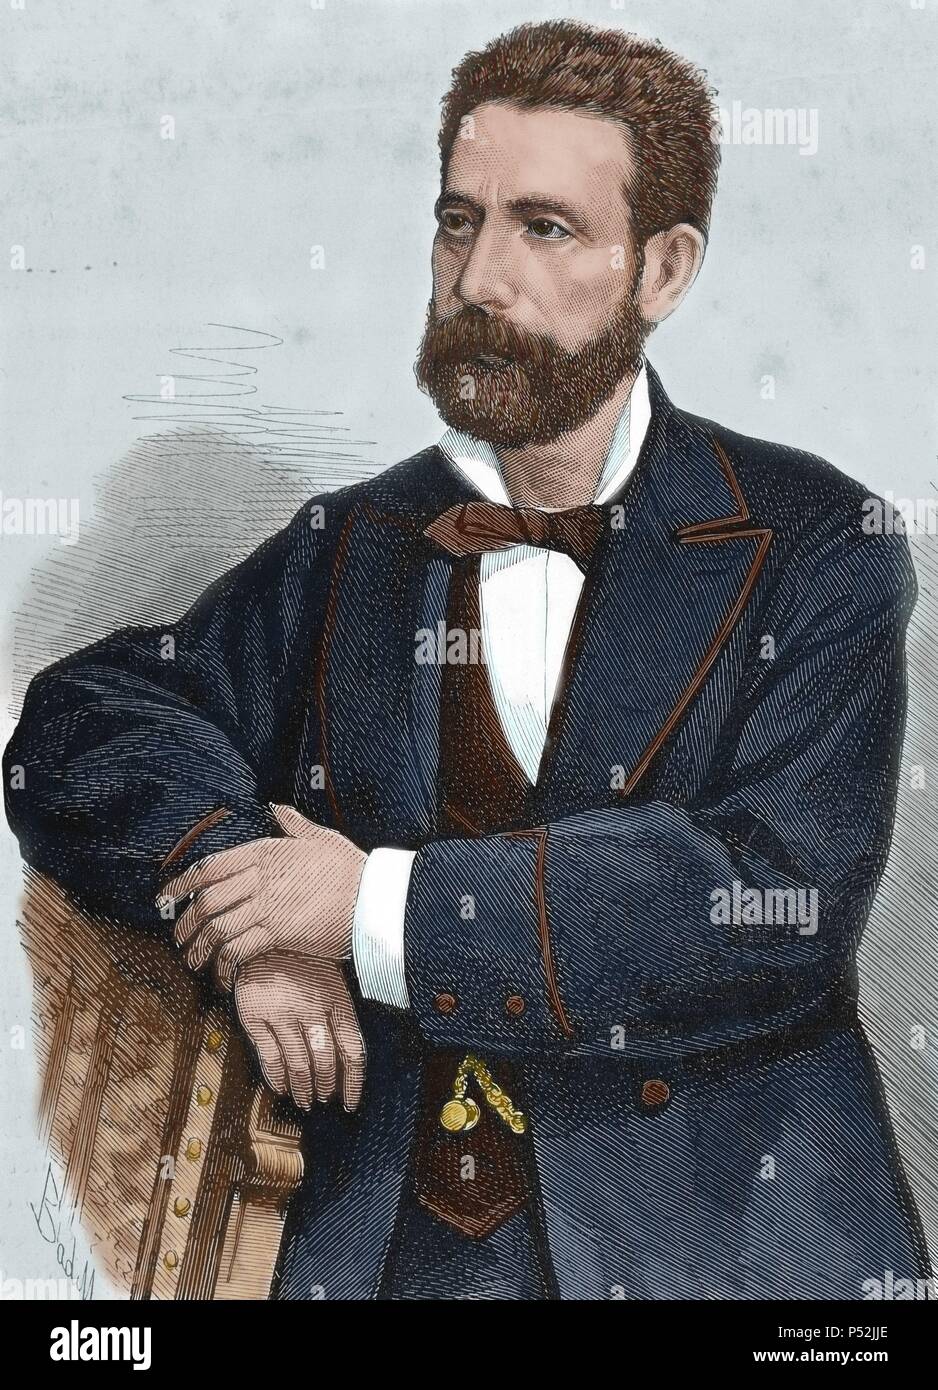 Gaspar Nunez de Arce (1834Ð1903) was a Spanish poet, dramatist and statesman. Color engraving. Stock Photo